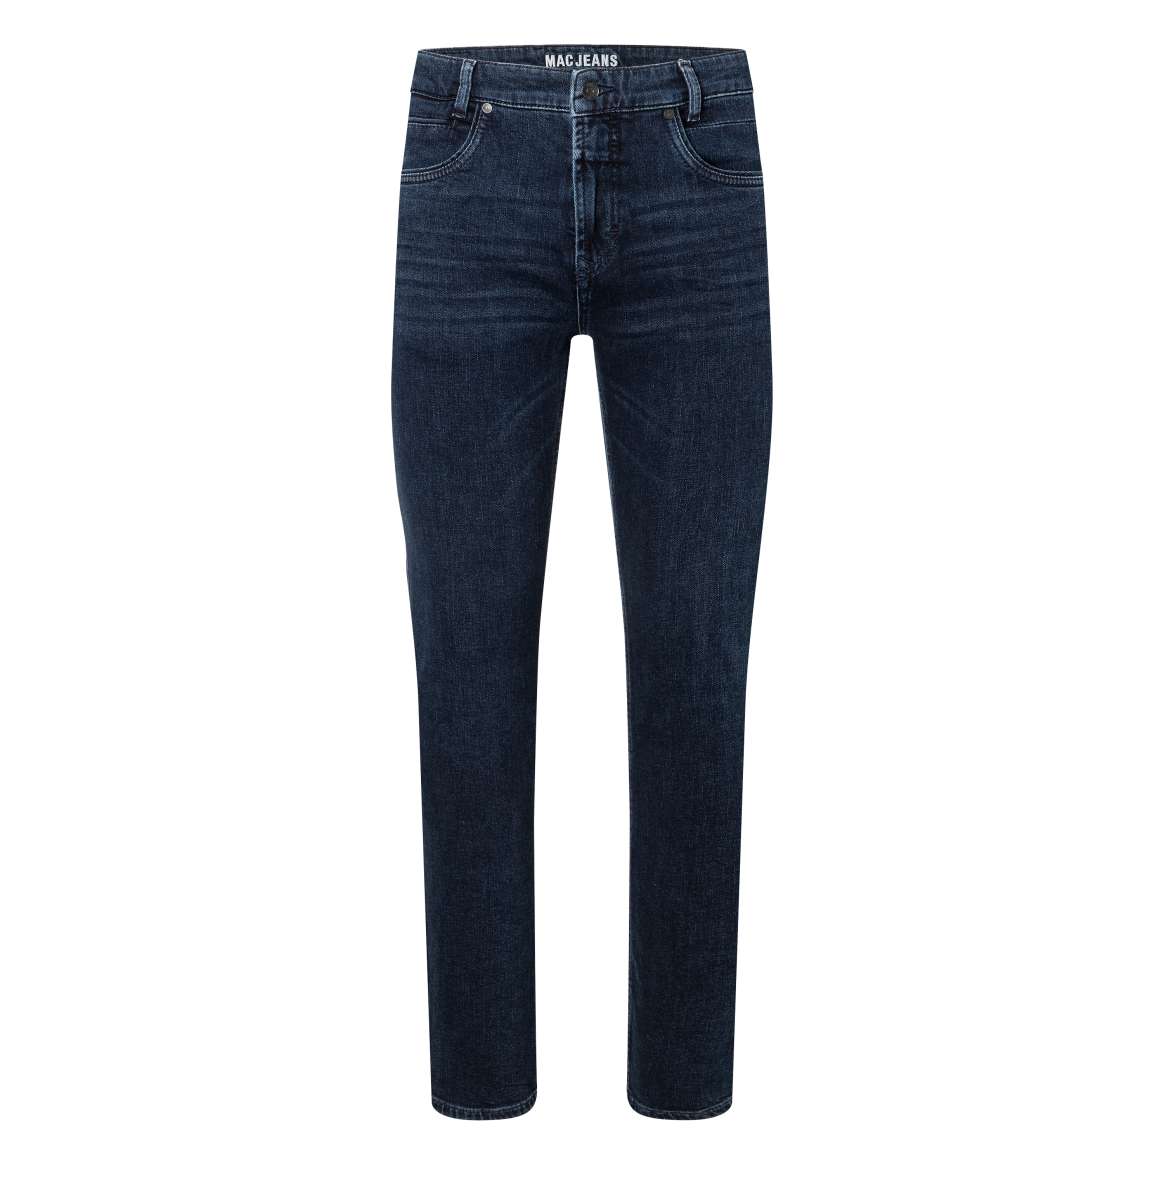 Cashmere blend jeans in dark blue by MAC